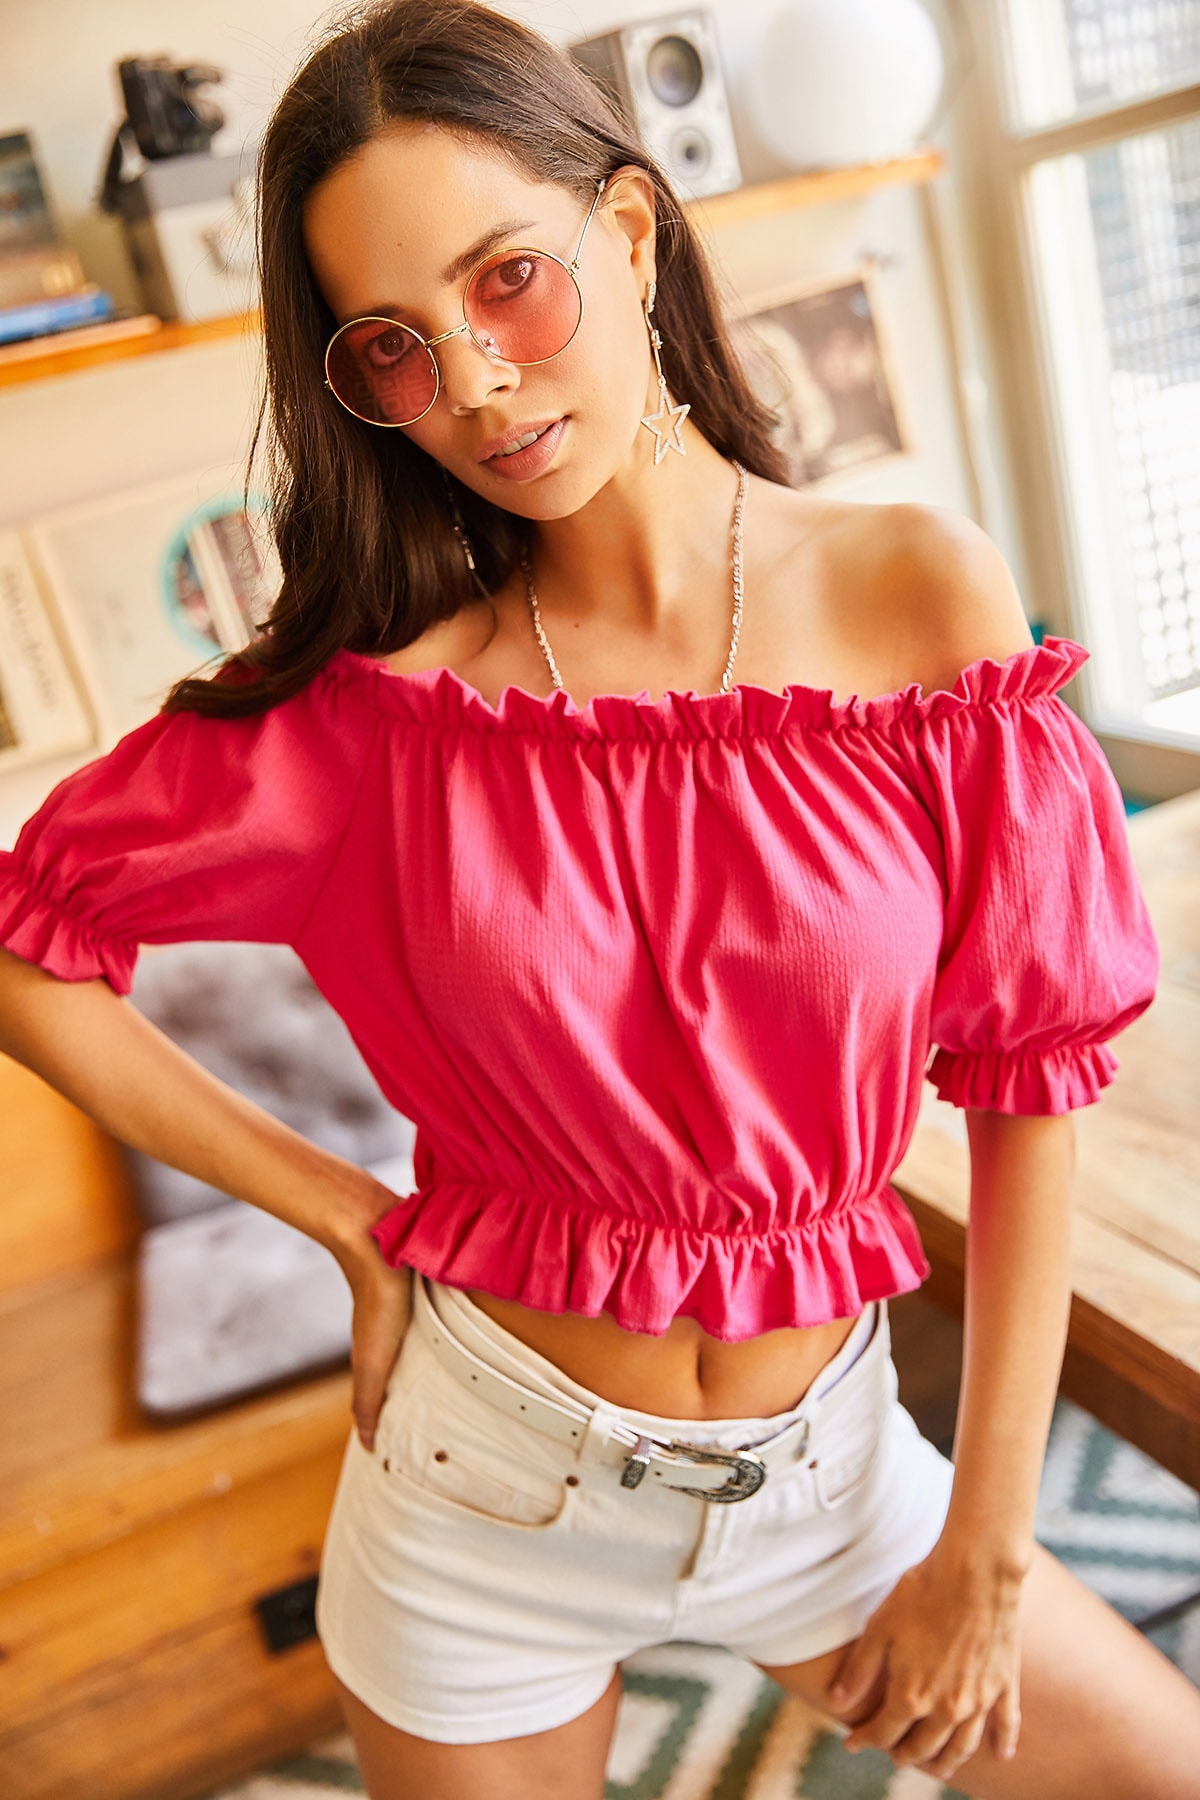 цена Женская укороченная трикотажная блузка цвета фуксии Gipsy Olalook, розовый